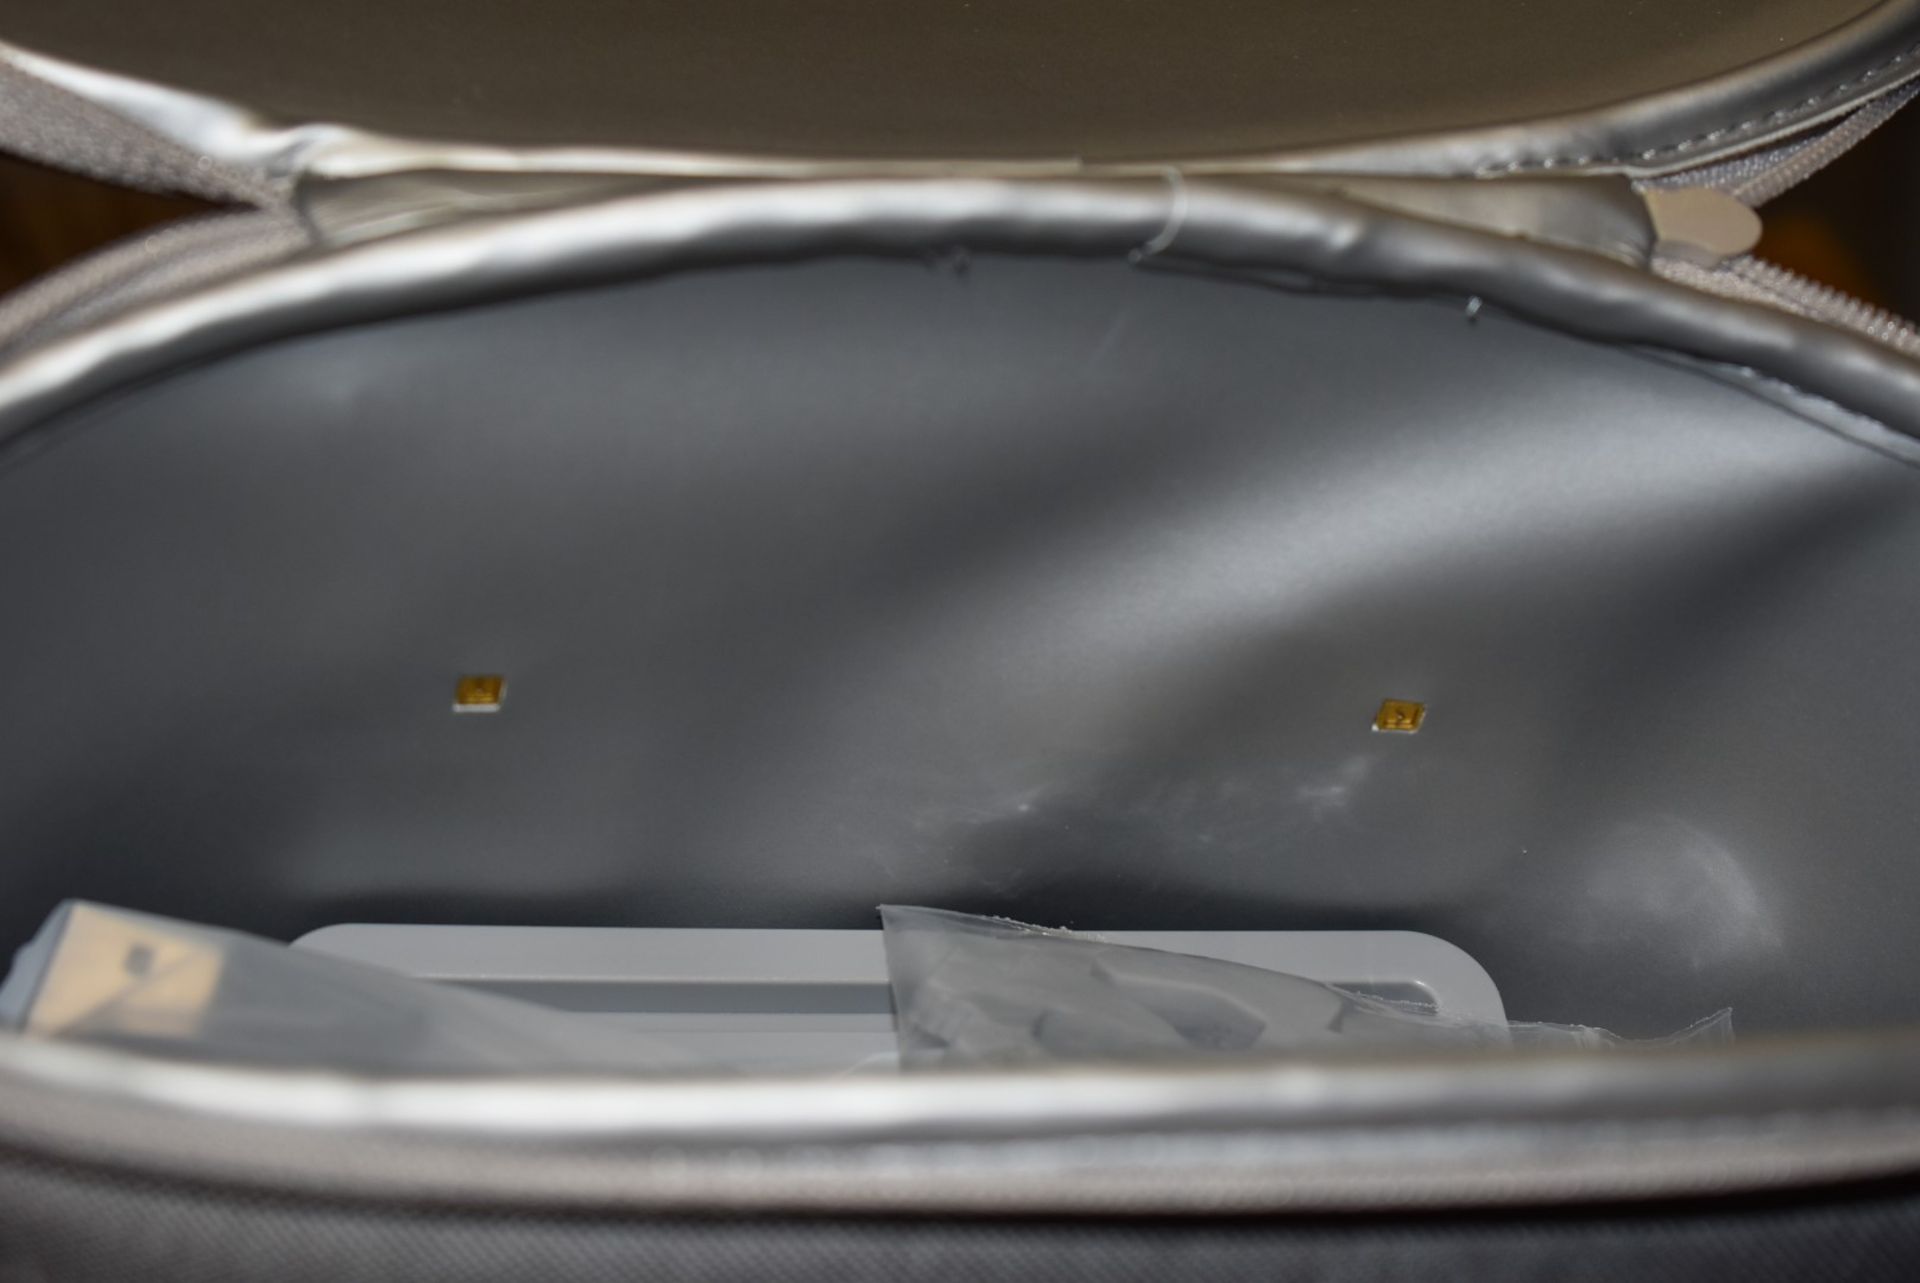 4 x Homedics UV Clean Portable Sanitiser Bags - Kills Upto 99.9% of Bacteria & Viruses in Just 60 - Image 16 of 19